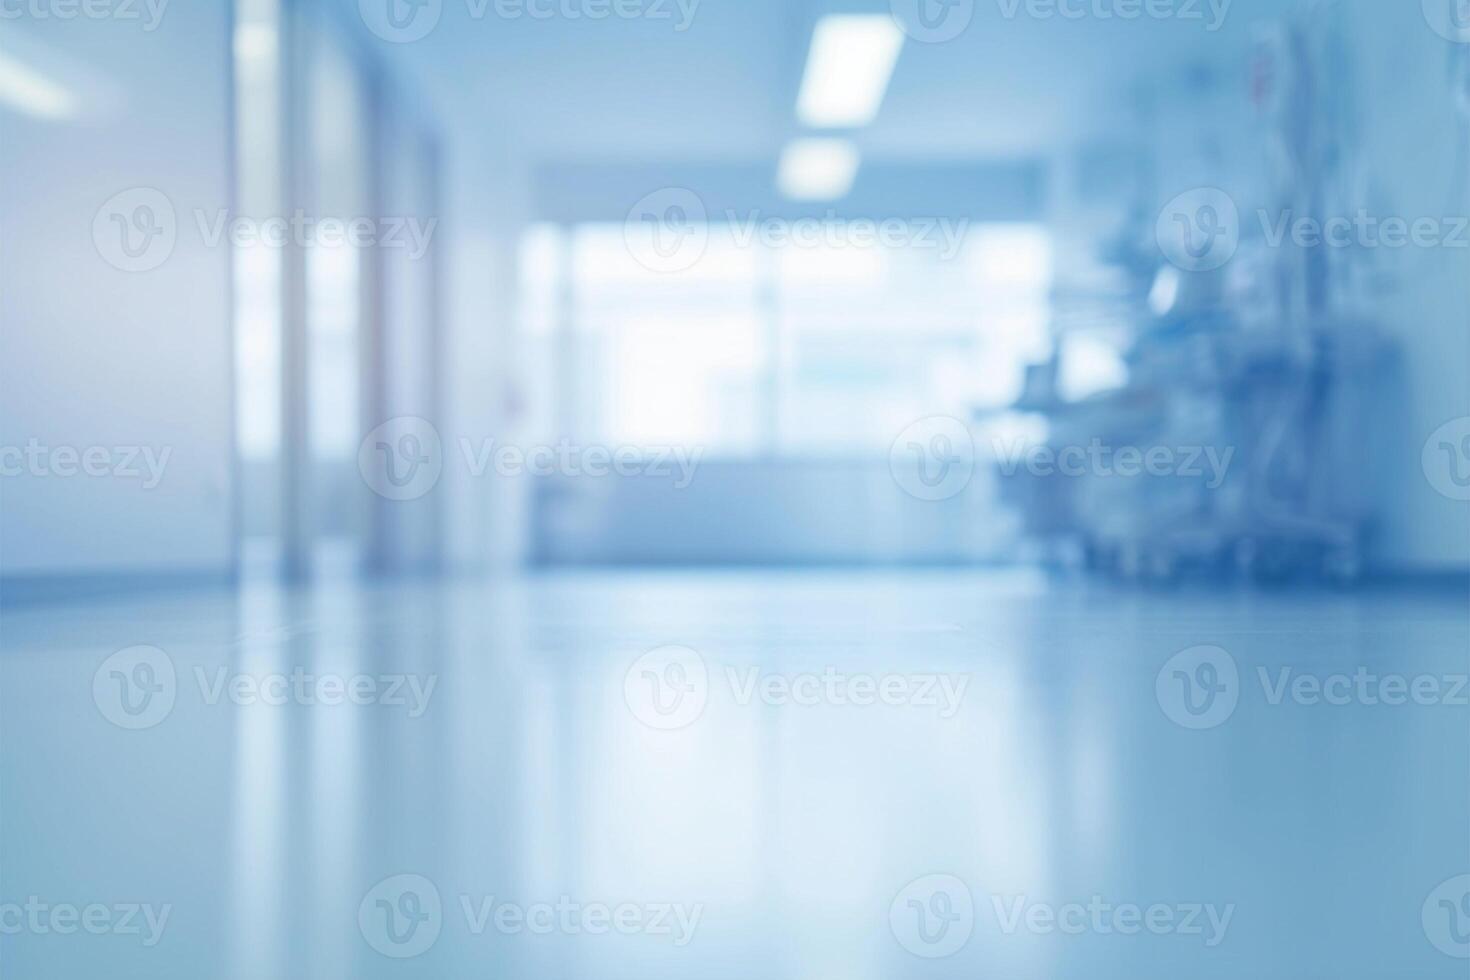 AI generated Publish Misty Medical Atmosphere Stock Photo Innovation, medical background blur